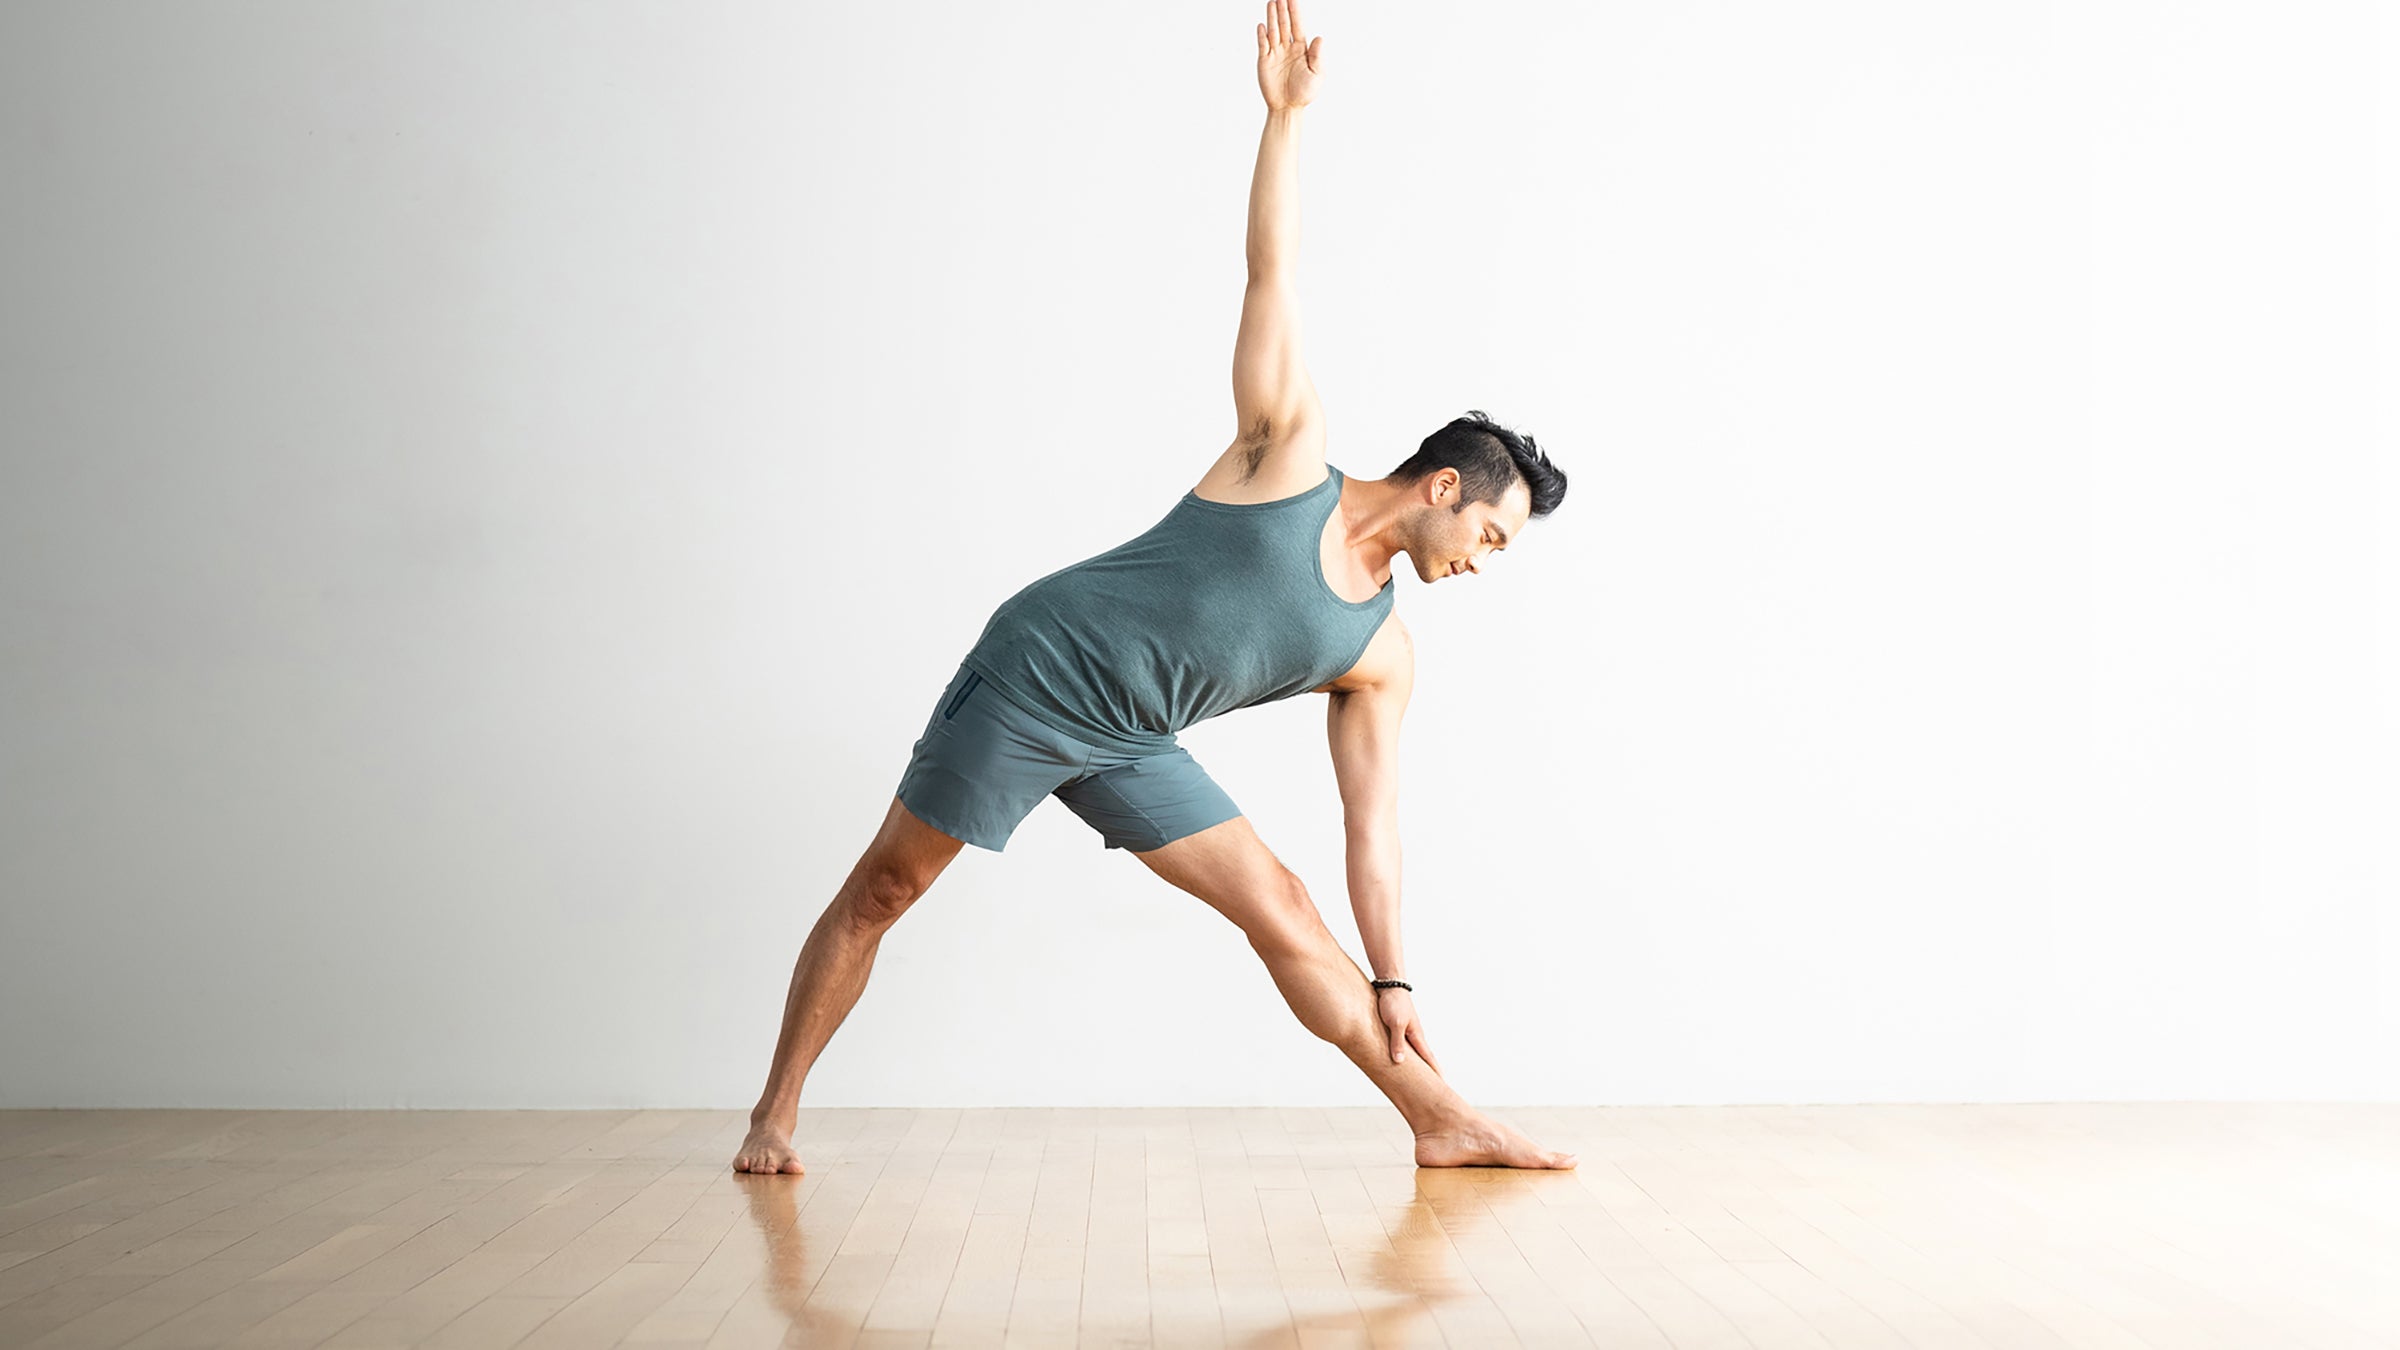 Anahata Chakra Yoga Postures | Yoga postures, Chakra yoga, Muladhara chakra